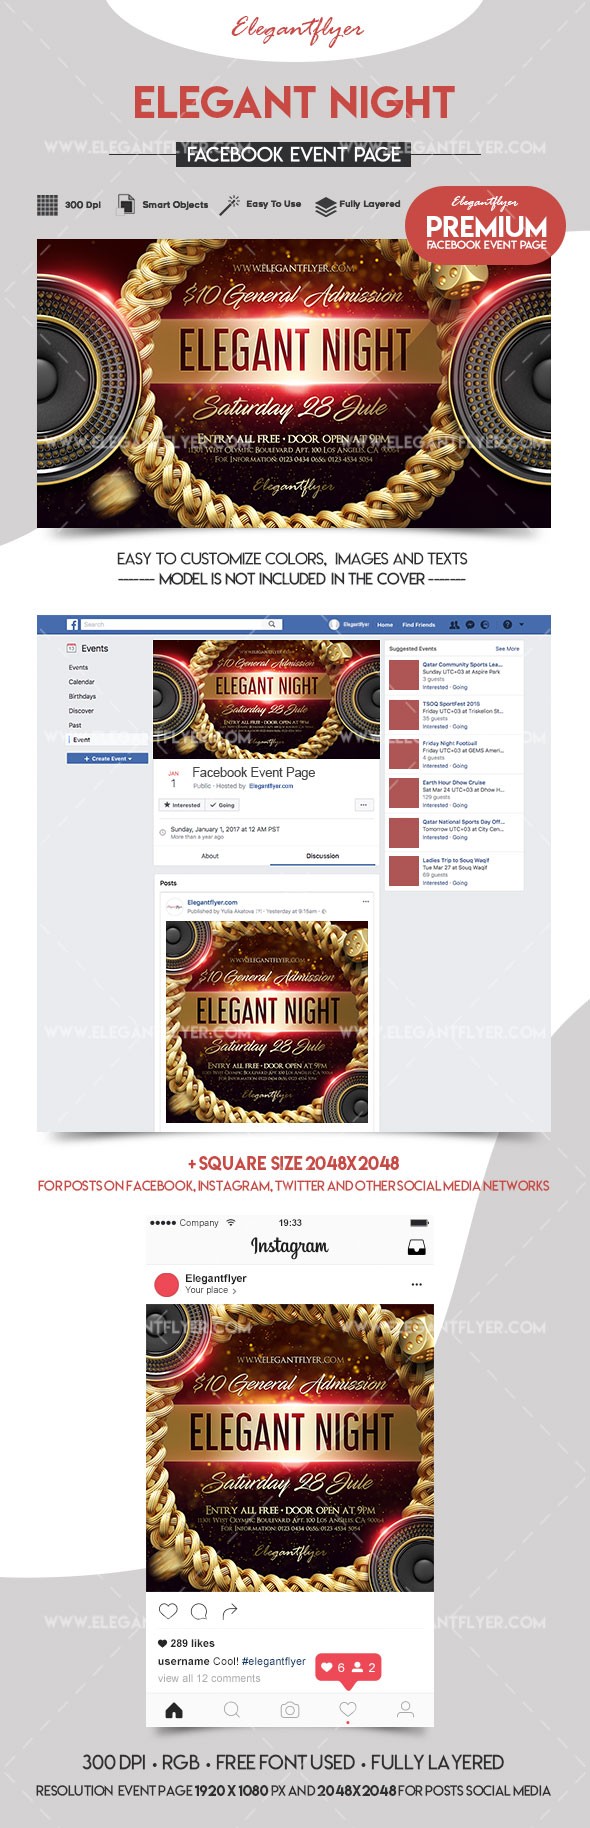 Elegant Night Facebook by ElegantFlyer